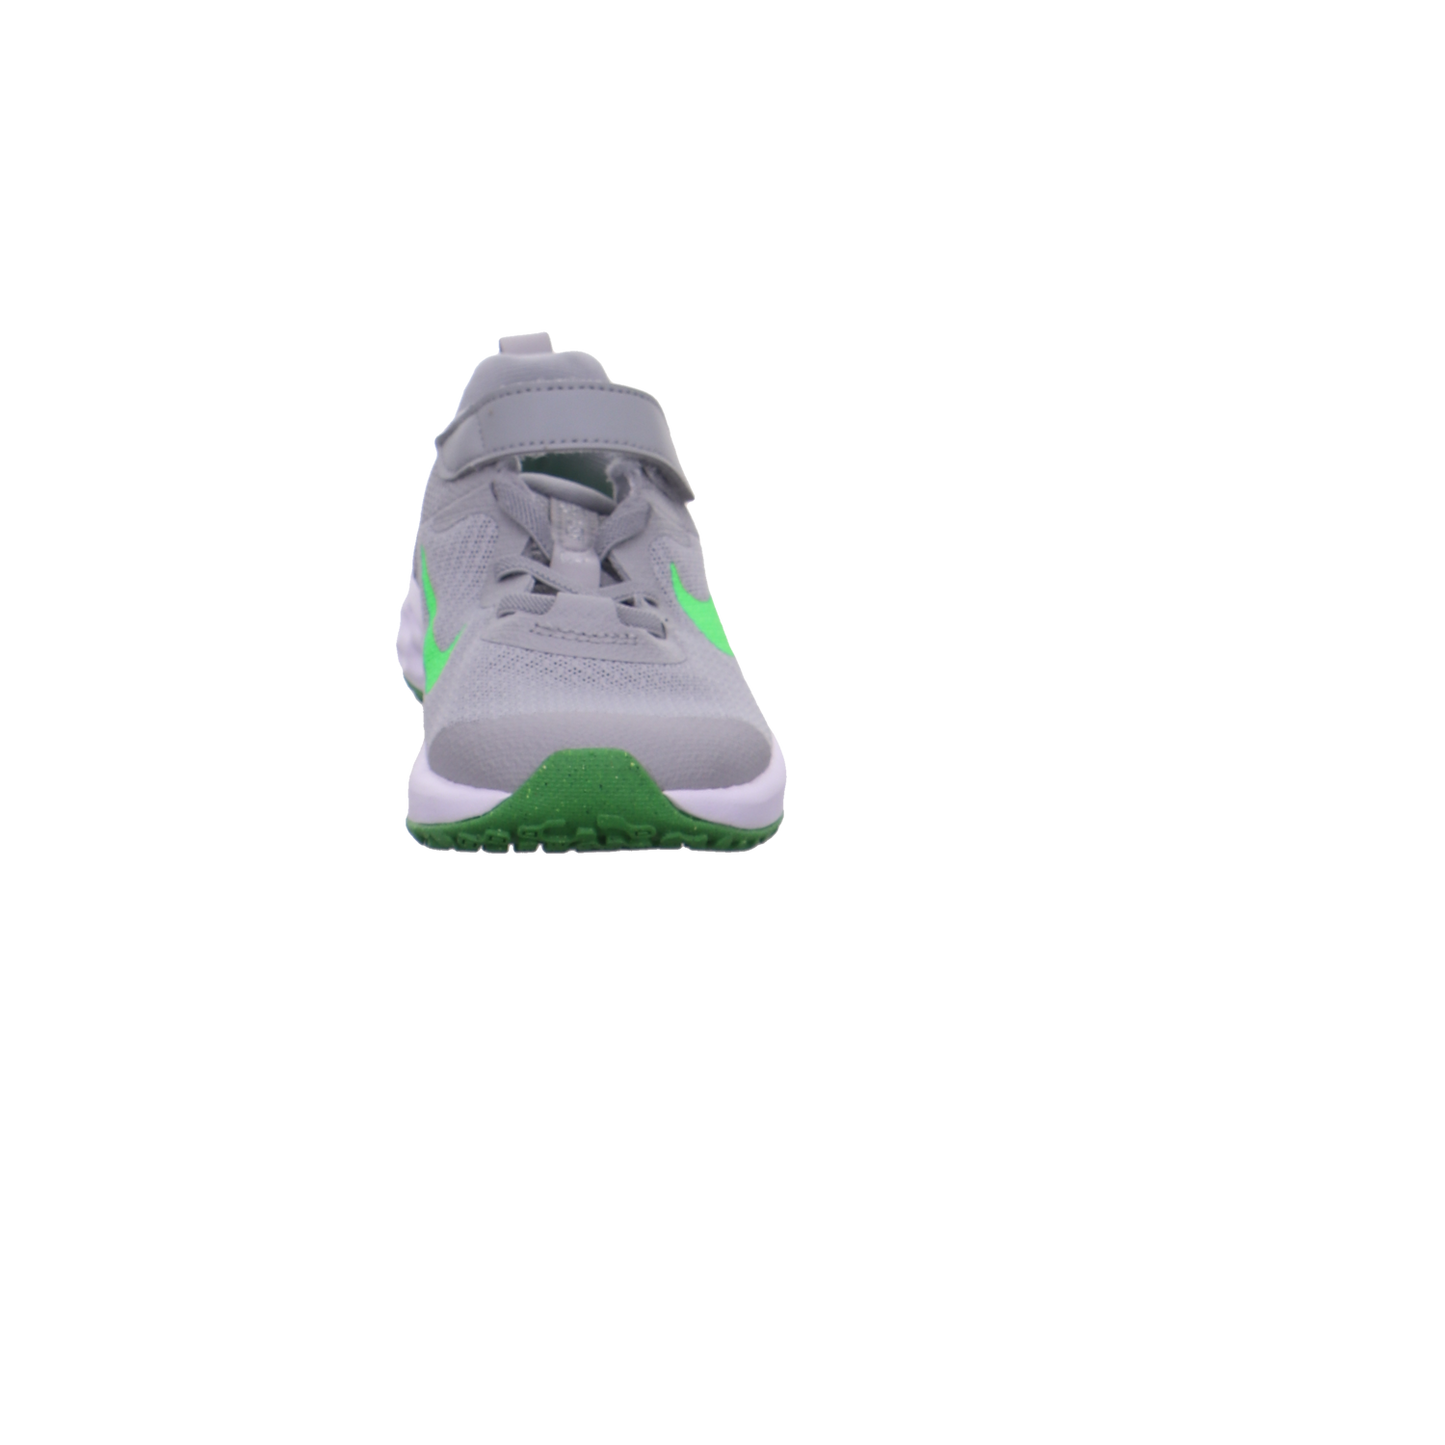 Nike Krabbel- und Lauflernschuhe grau kombi Bild3